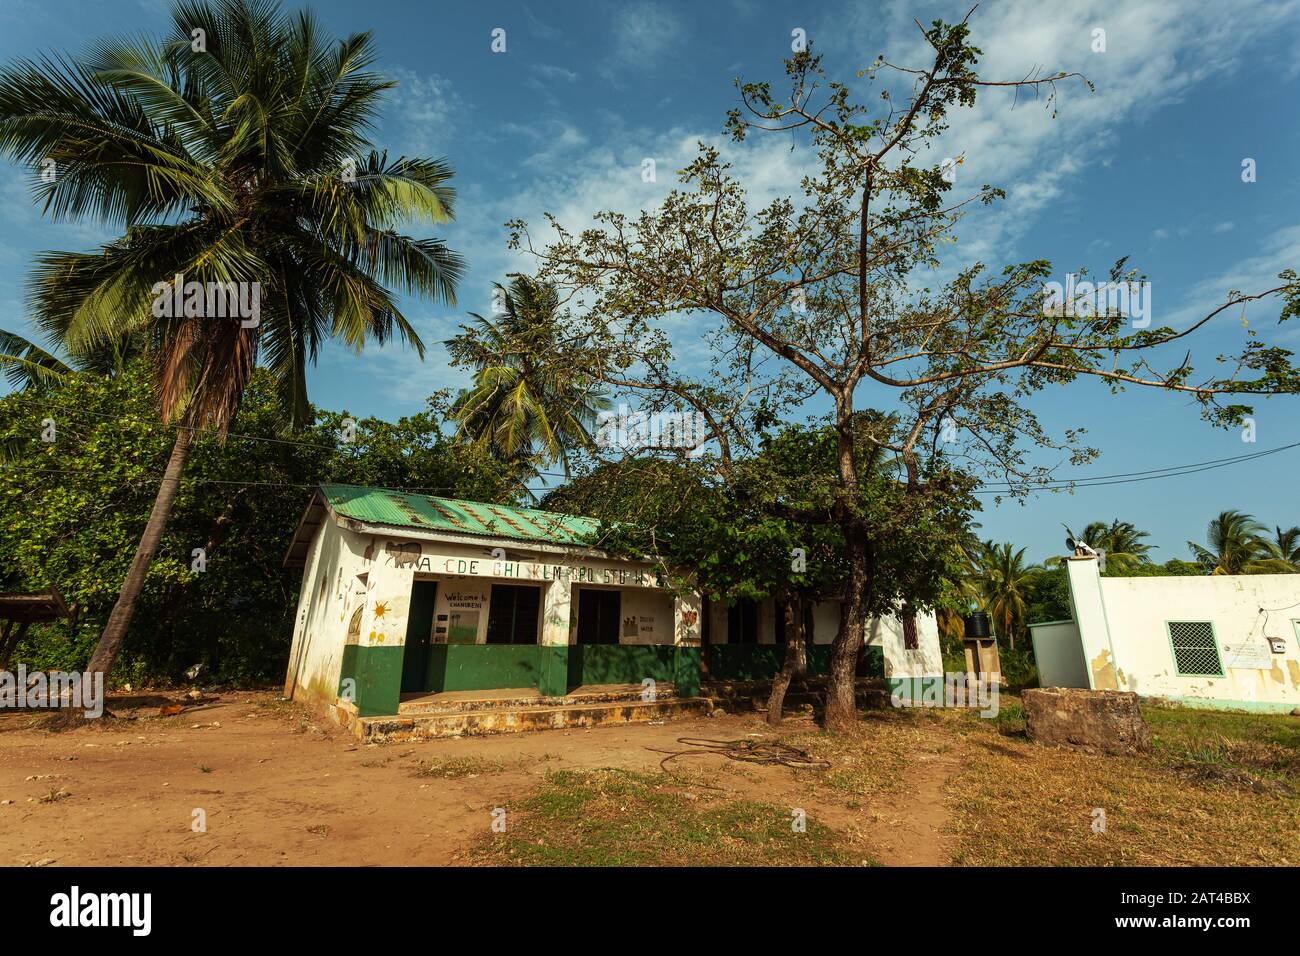 A nursery school building under palms in a village in Kenya (Ukunda) Stock Photo